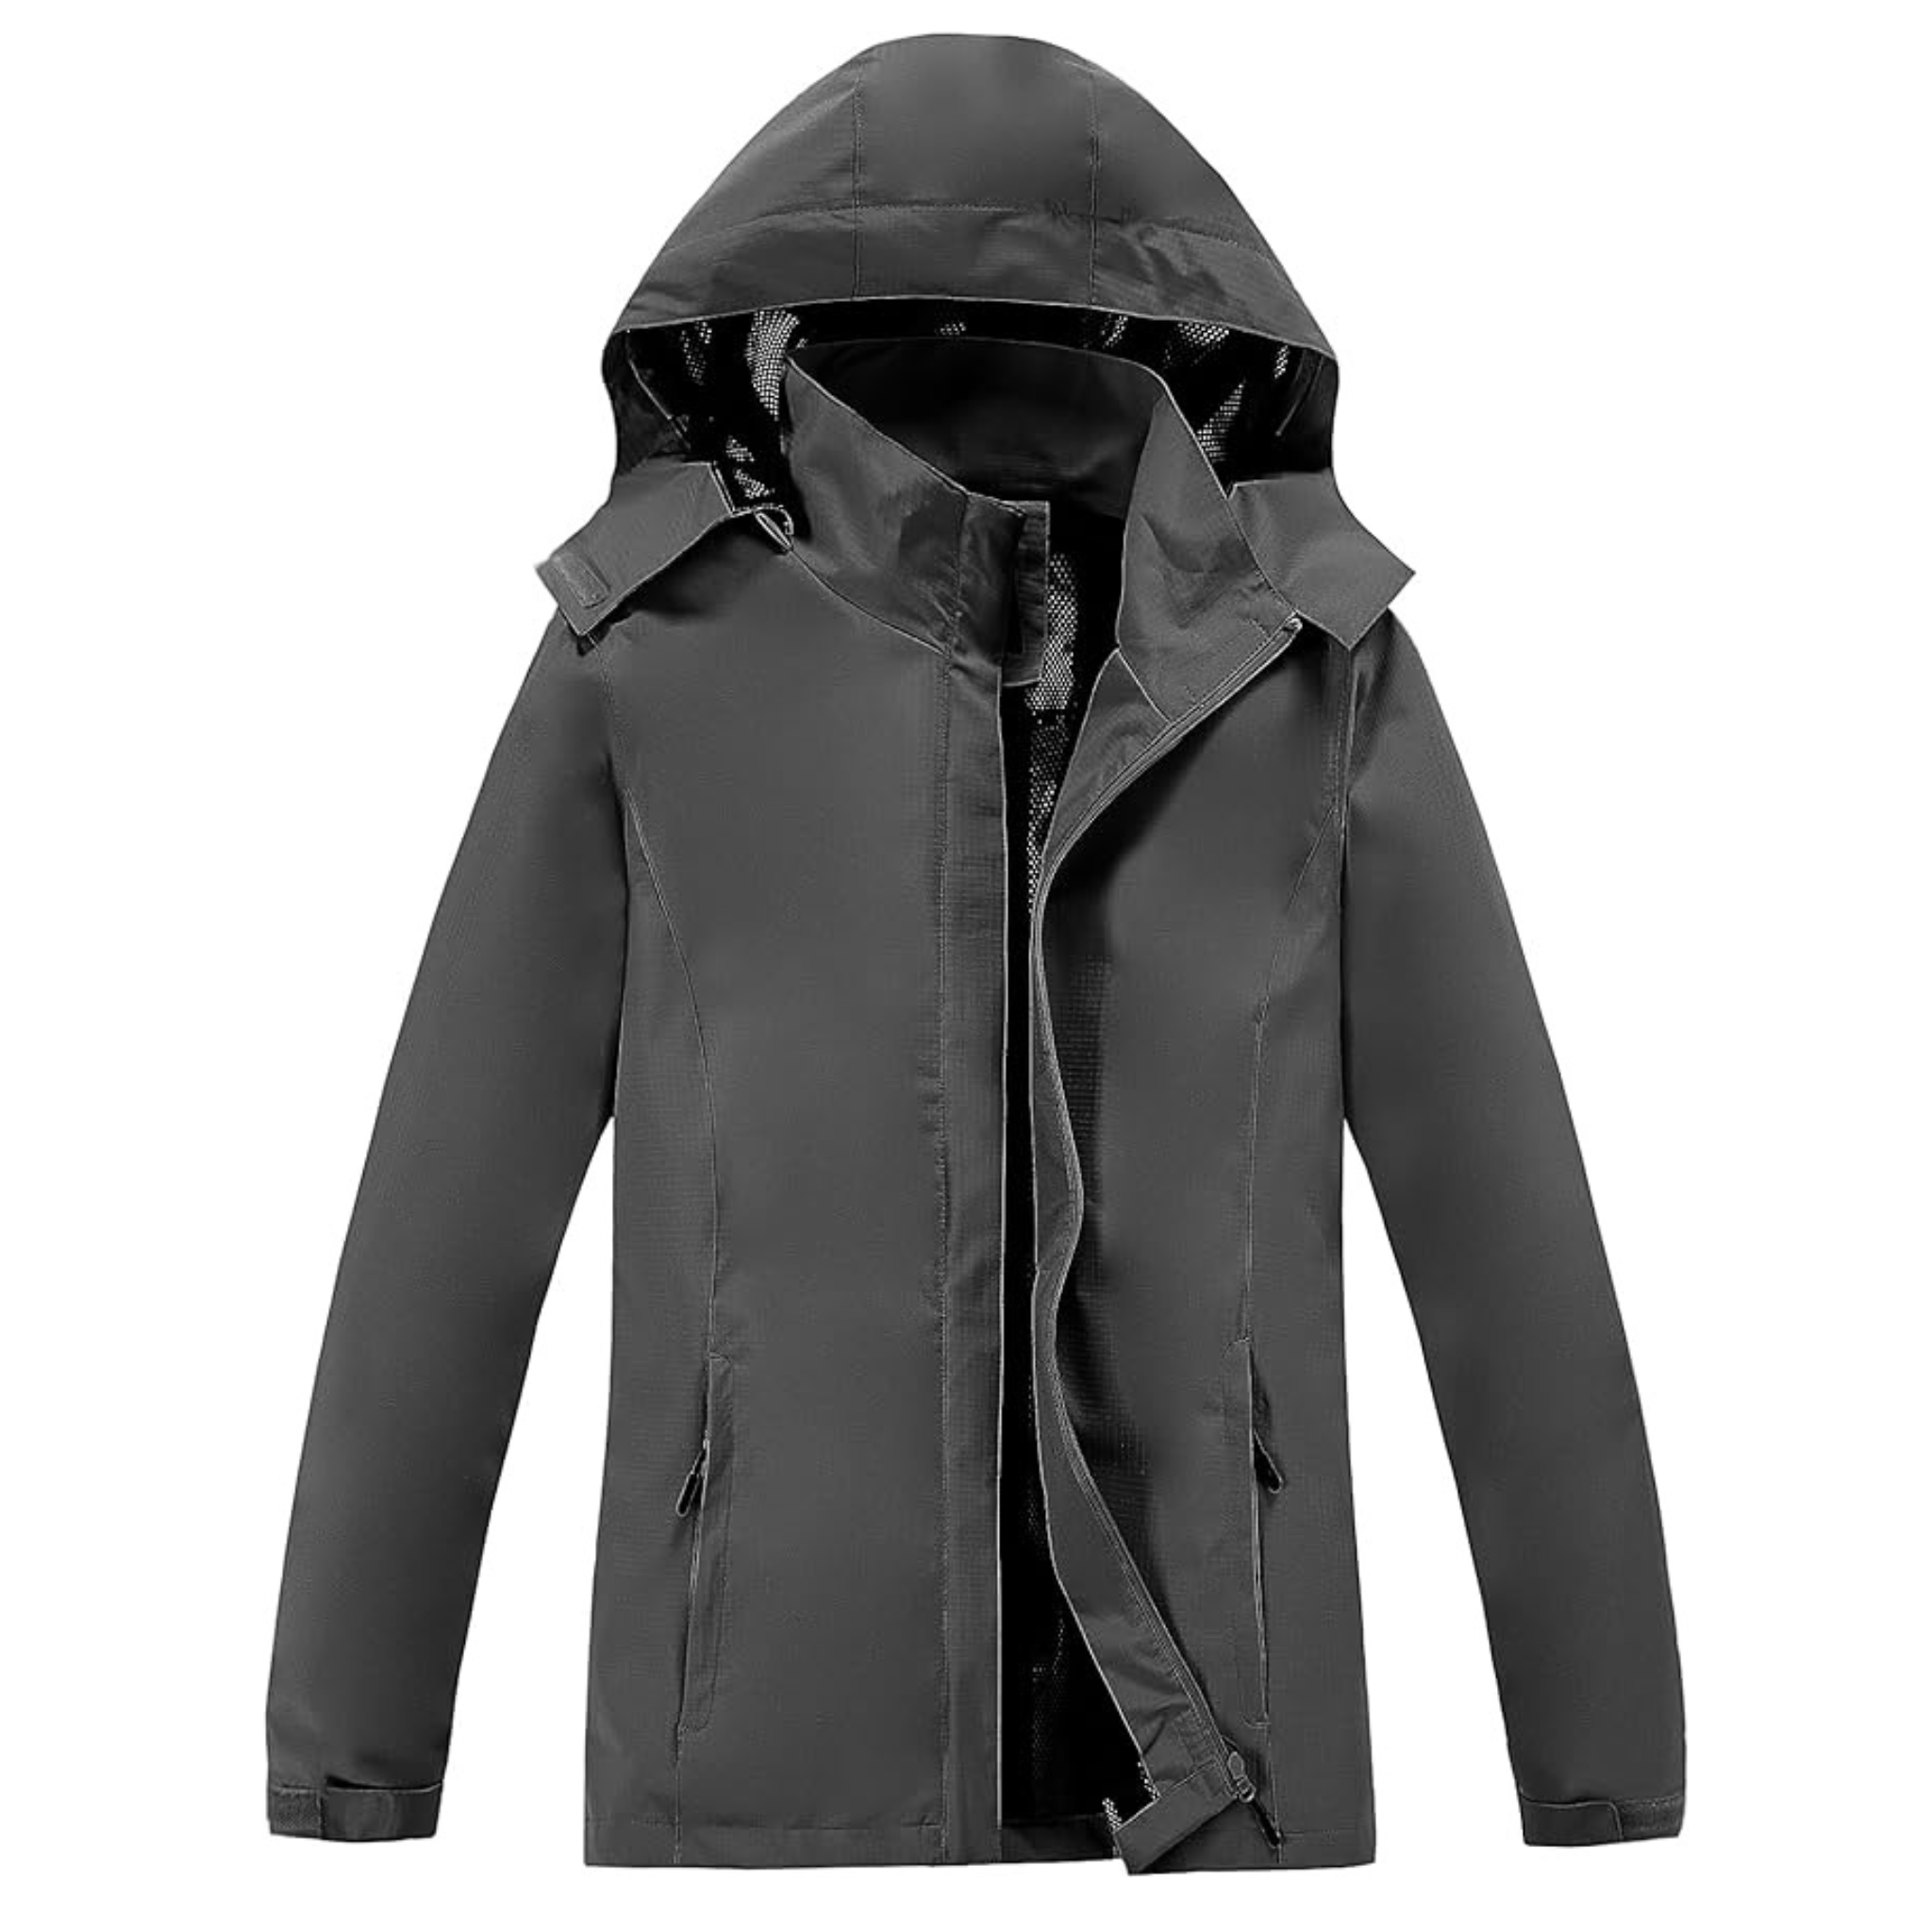 Women's Lightweight Waterproof Rain Jacket with Hood